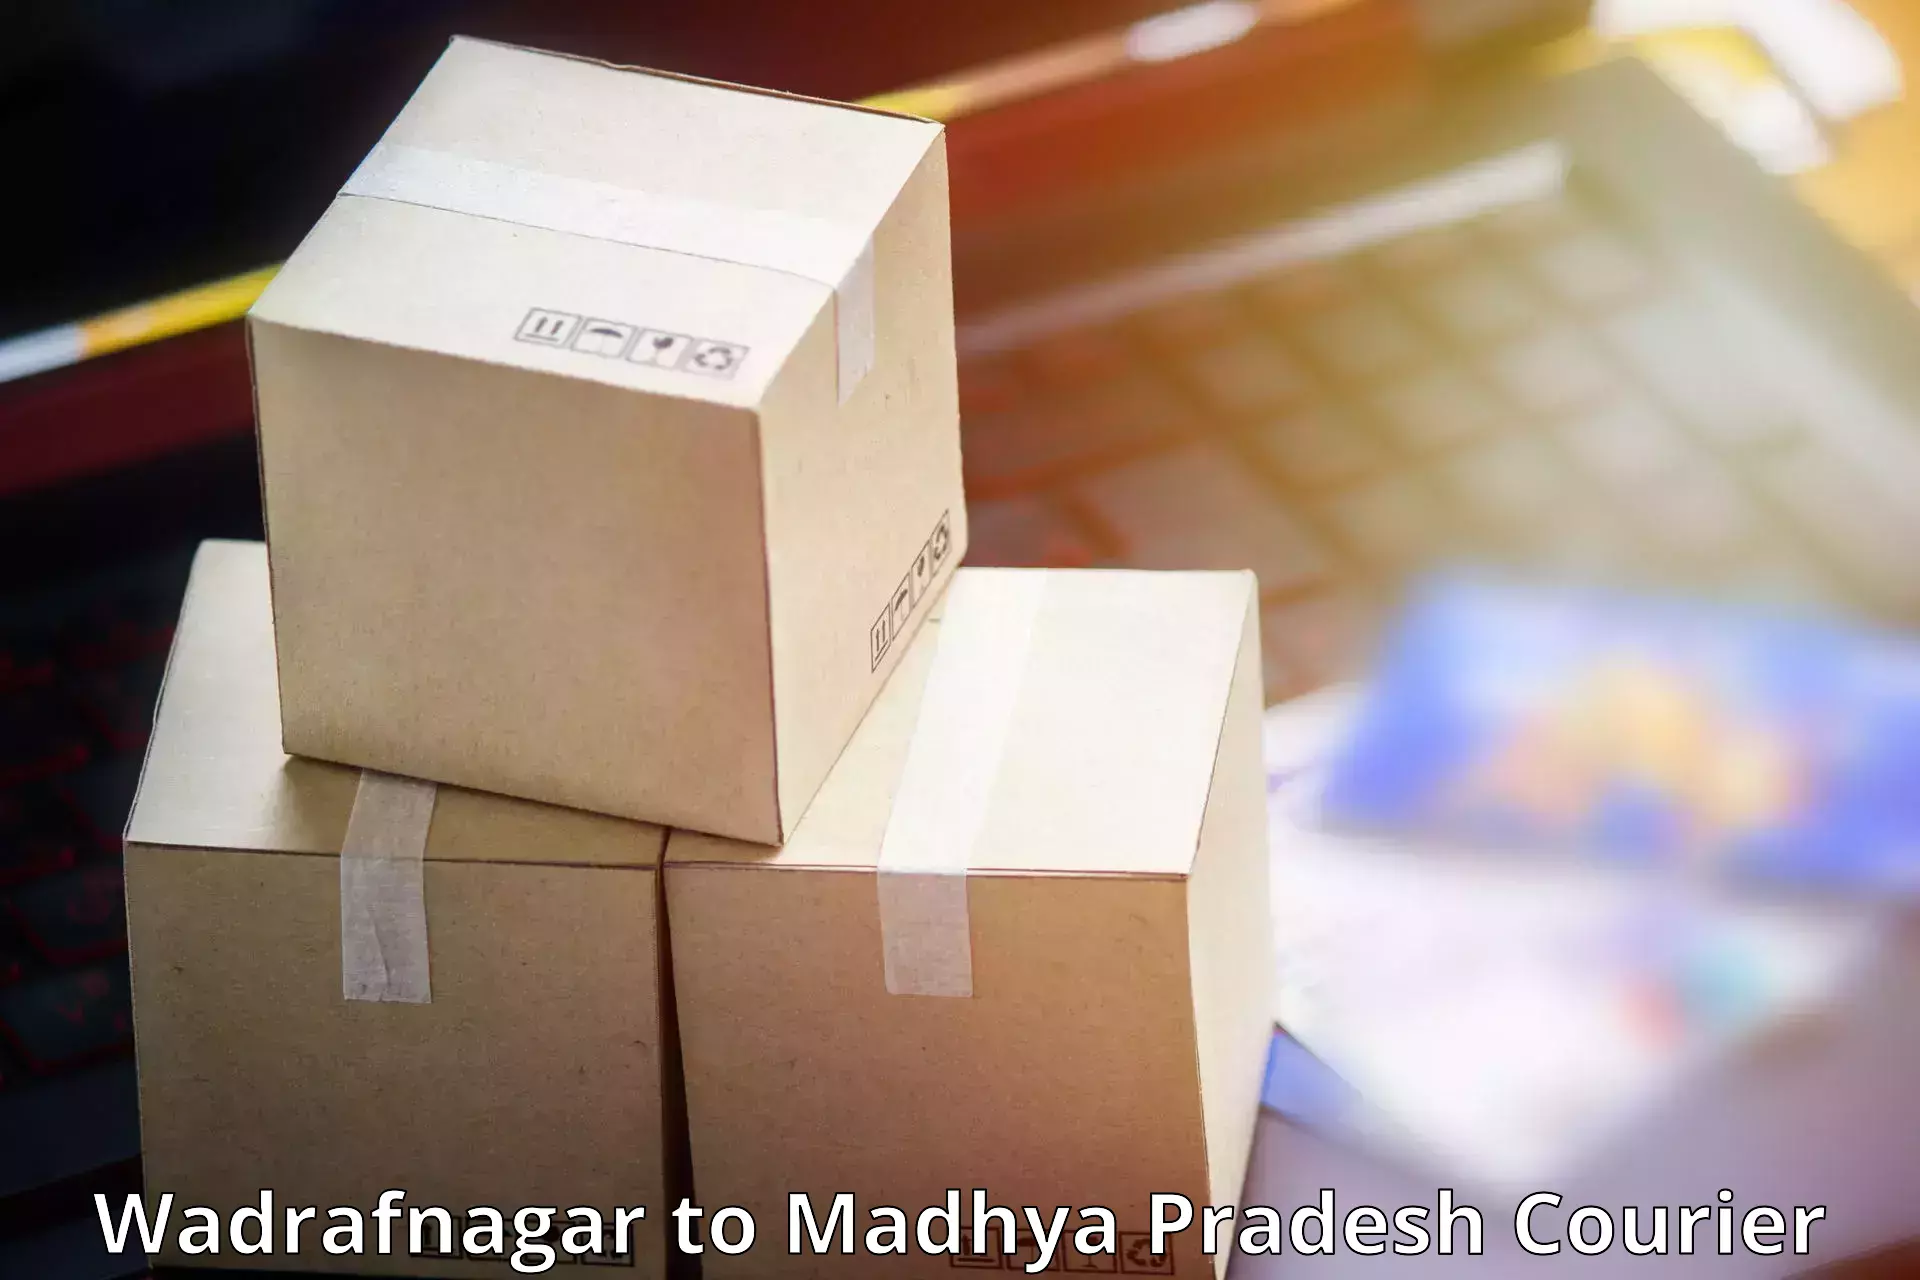 Flexible shipping options Wadrafnagar to Sheopur